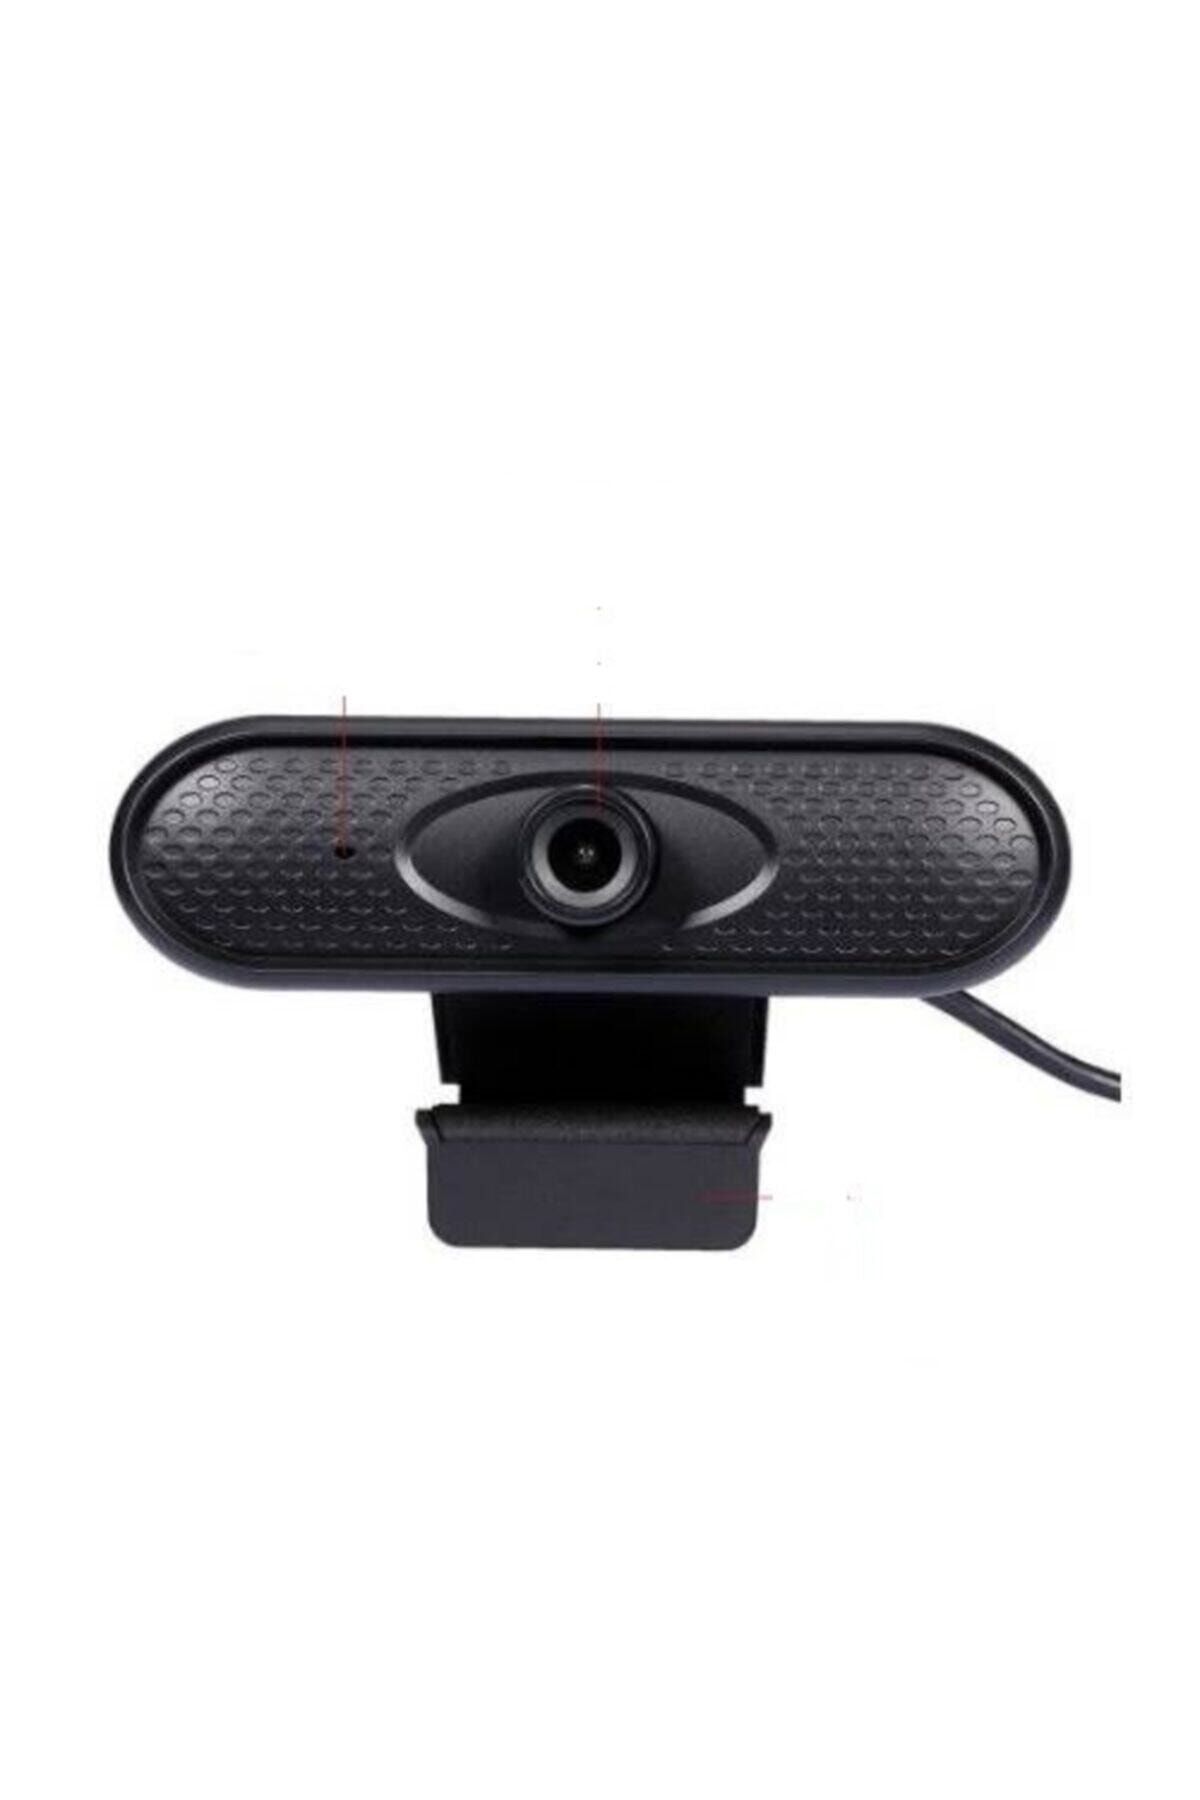 Komtech 1080p Webcam Kamera Pc Dizüstü